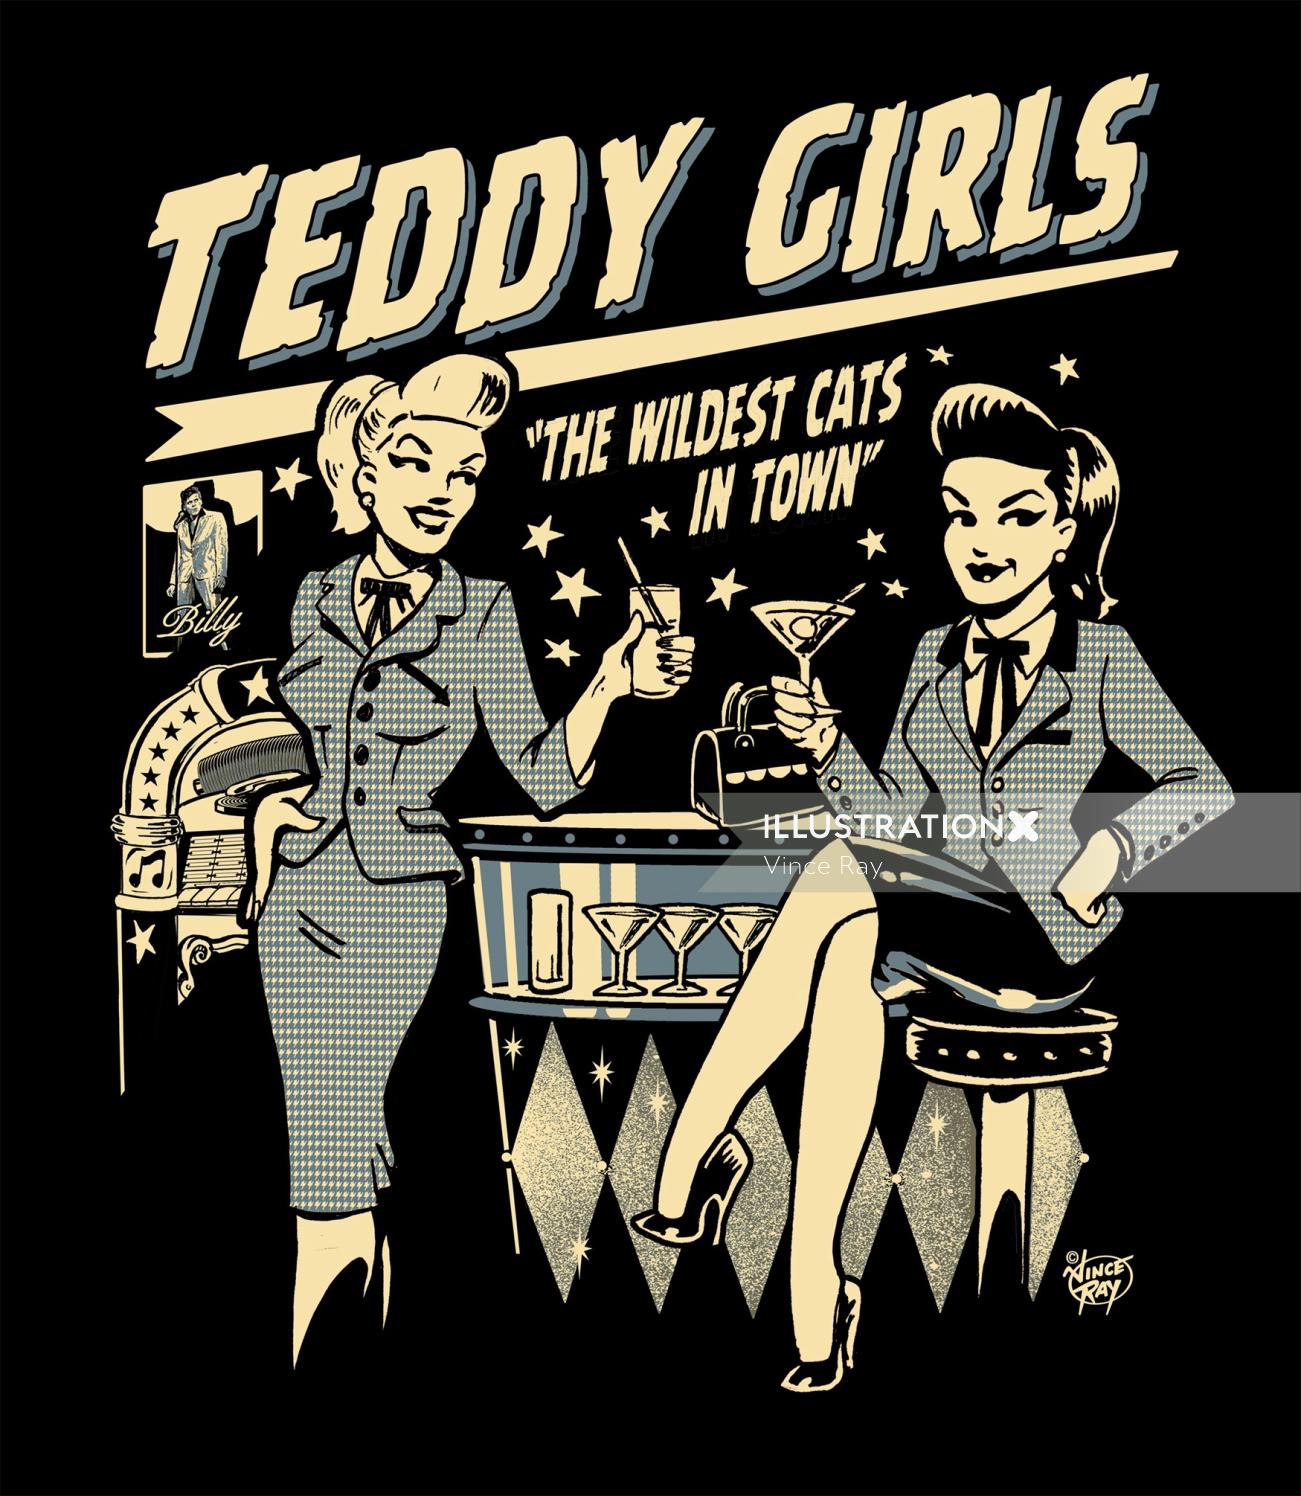 Diseño de cartel de teddy girls.